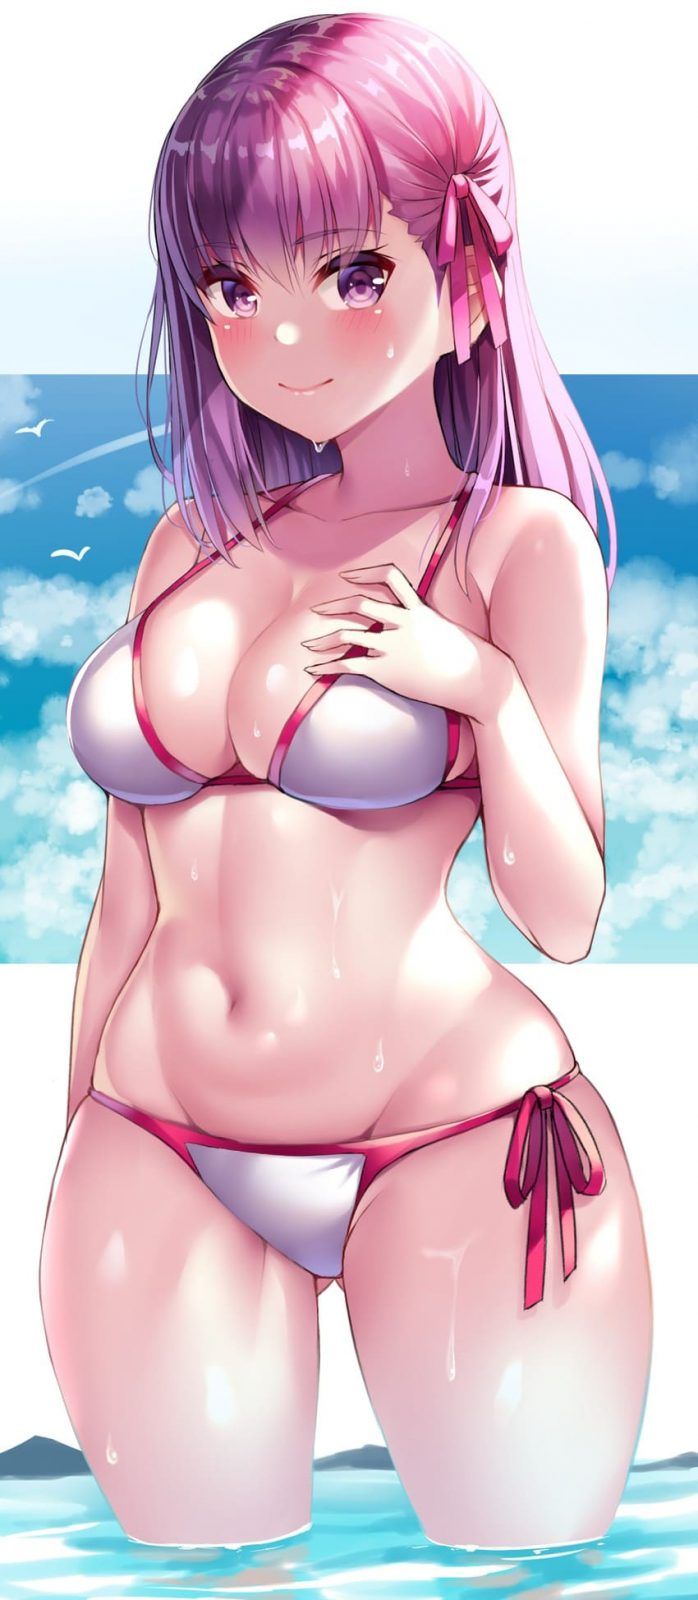 [Erotic anime summary] Fate series appearance character SakuraMagiri's erotic image [secondary erotic] 6